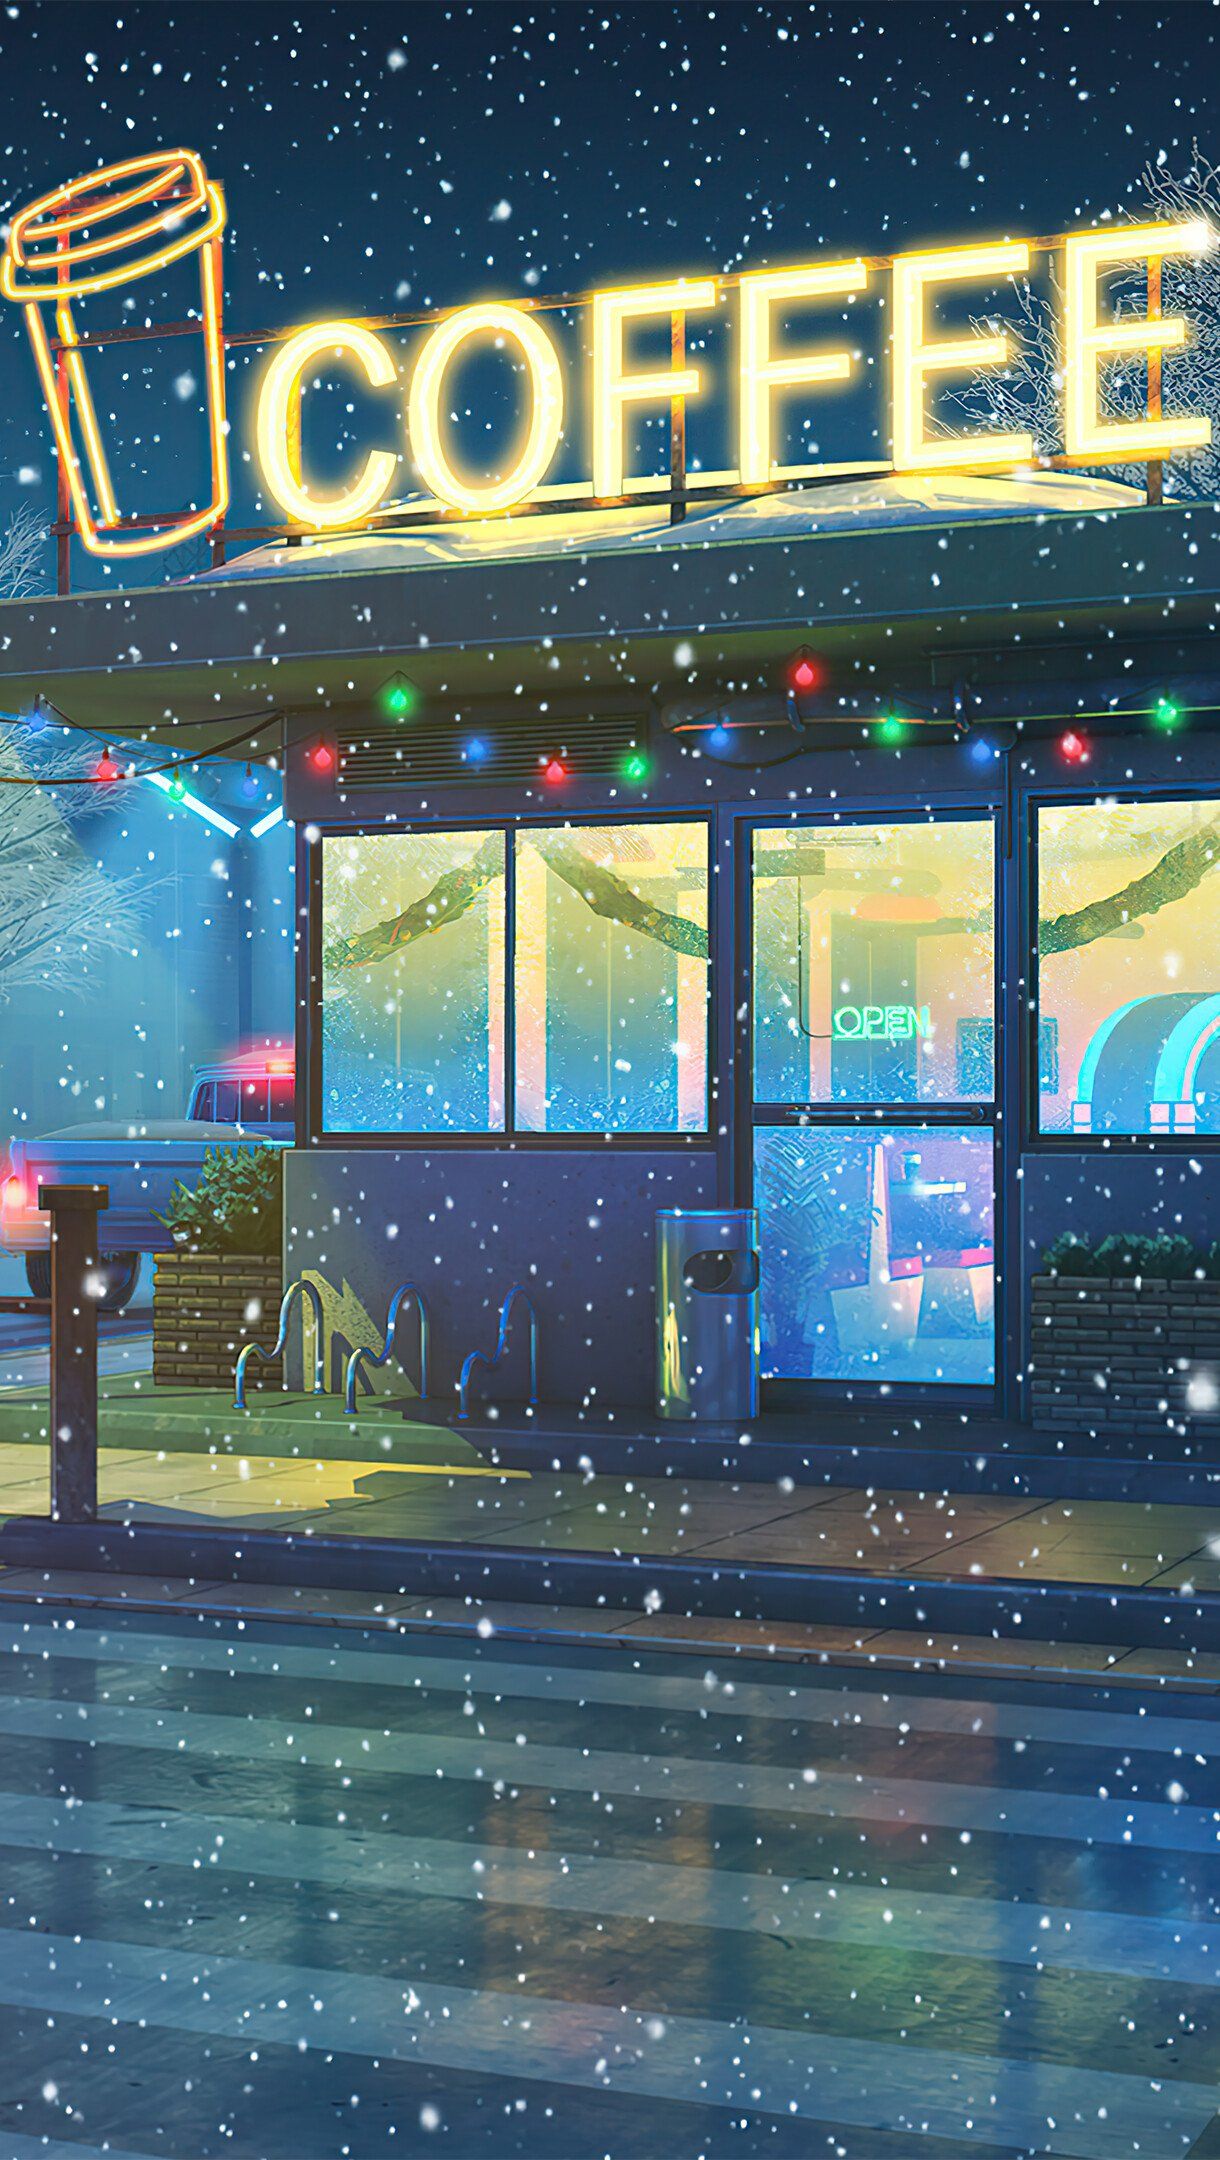 Coffee shop at winter during nightime Digital Art Wallpaper 4k Ultra HD